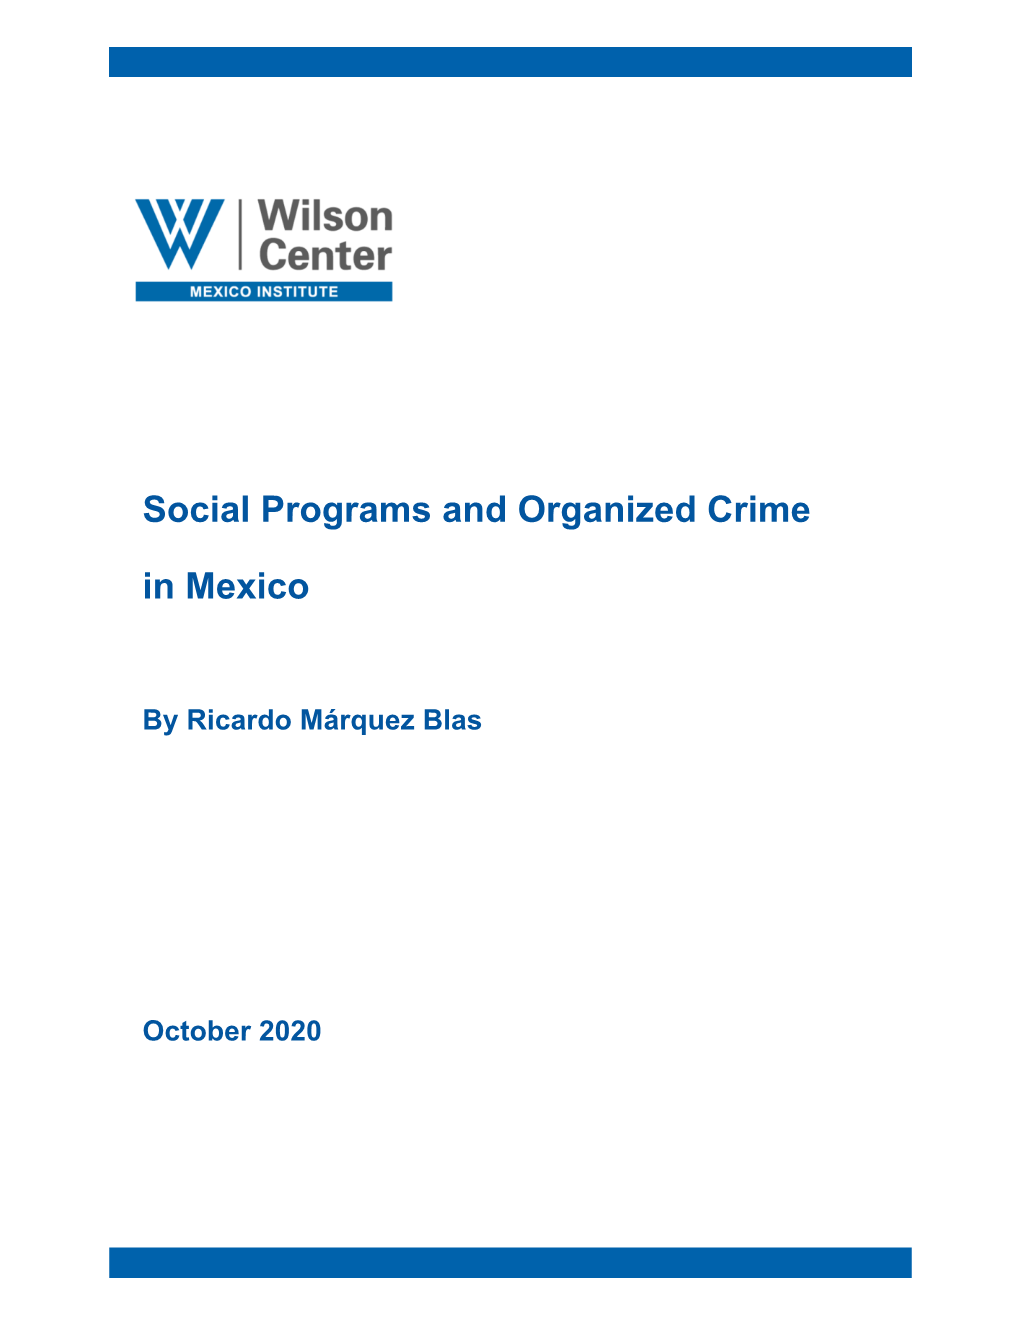 Social Programs and Organized Crime in Mexico